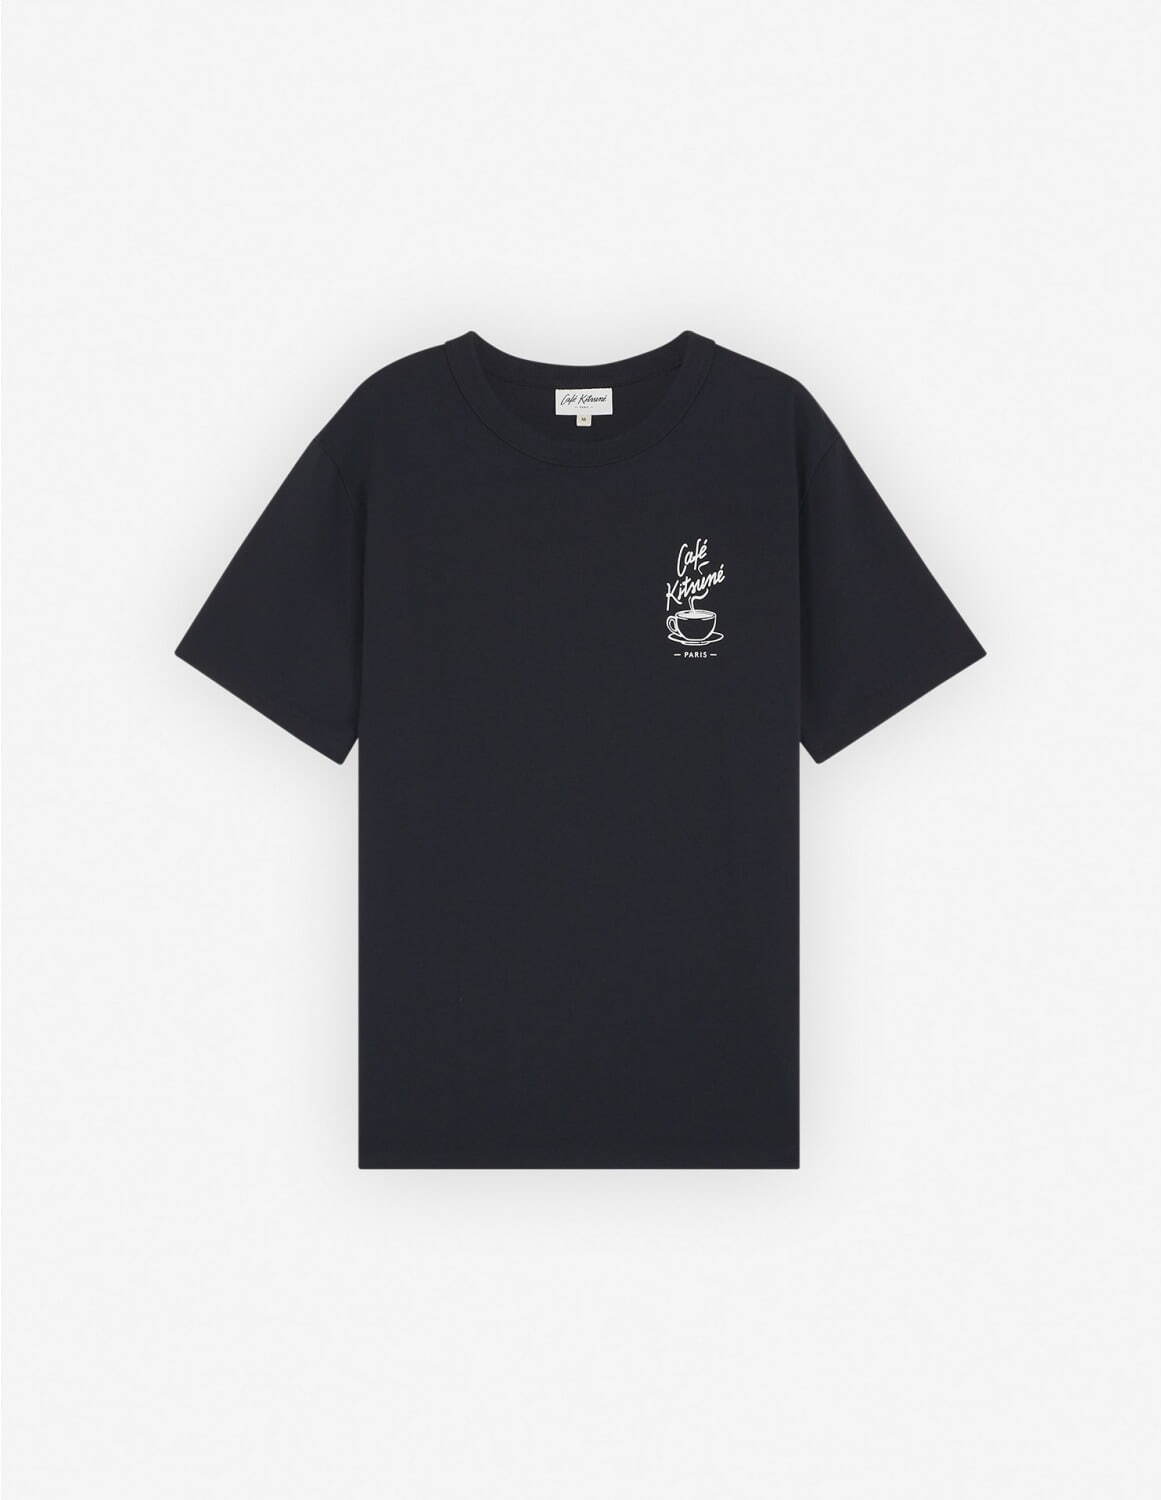 Tシャツ 19,800円